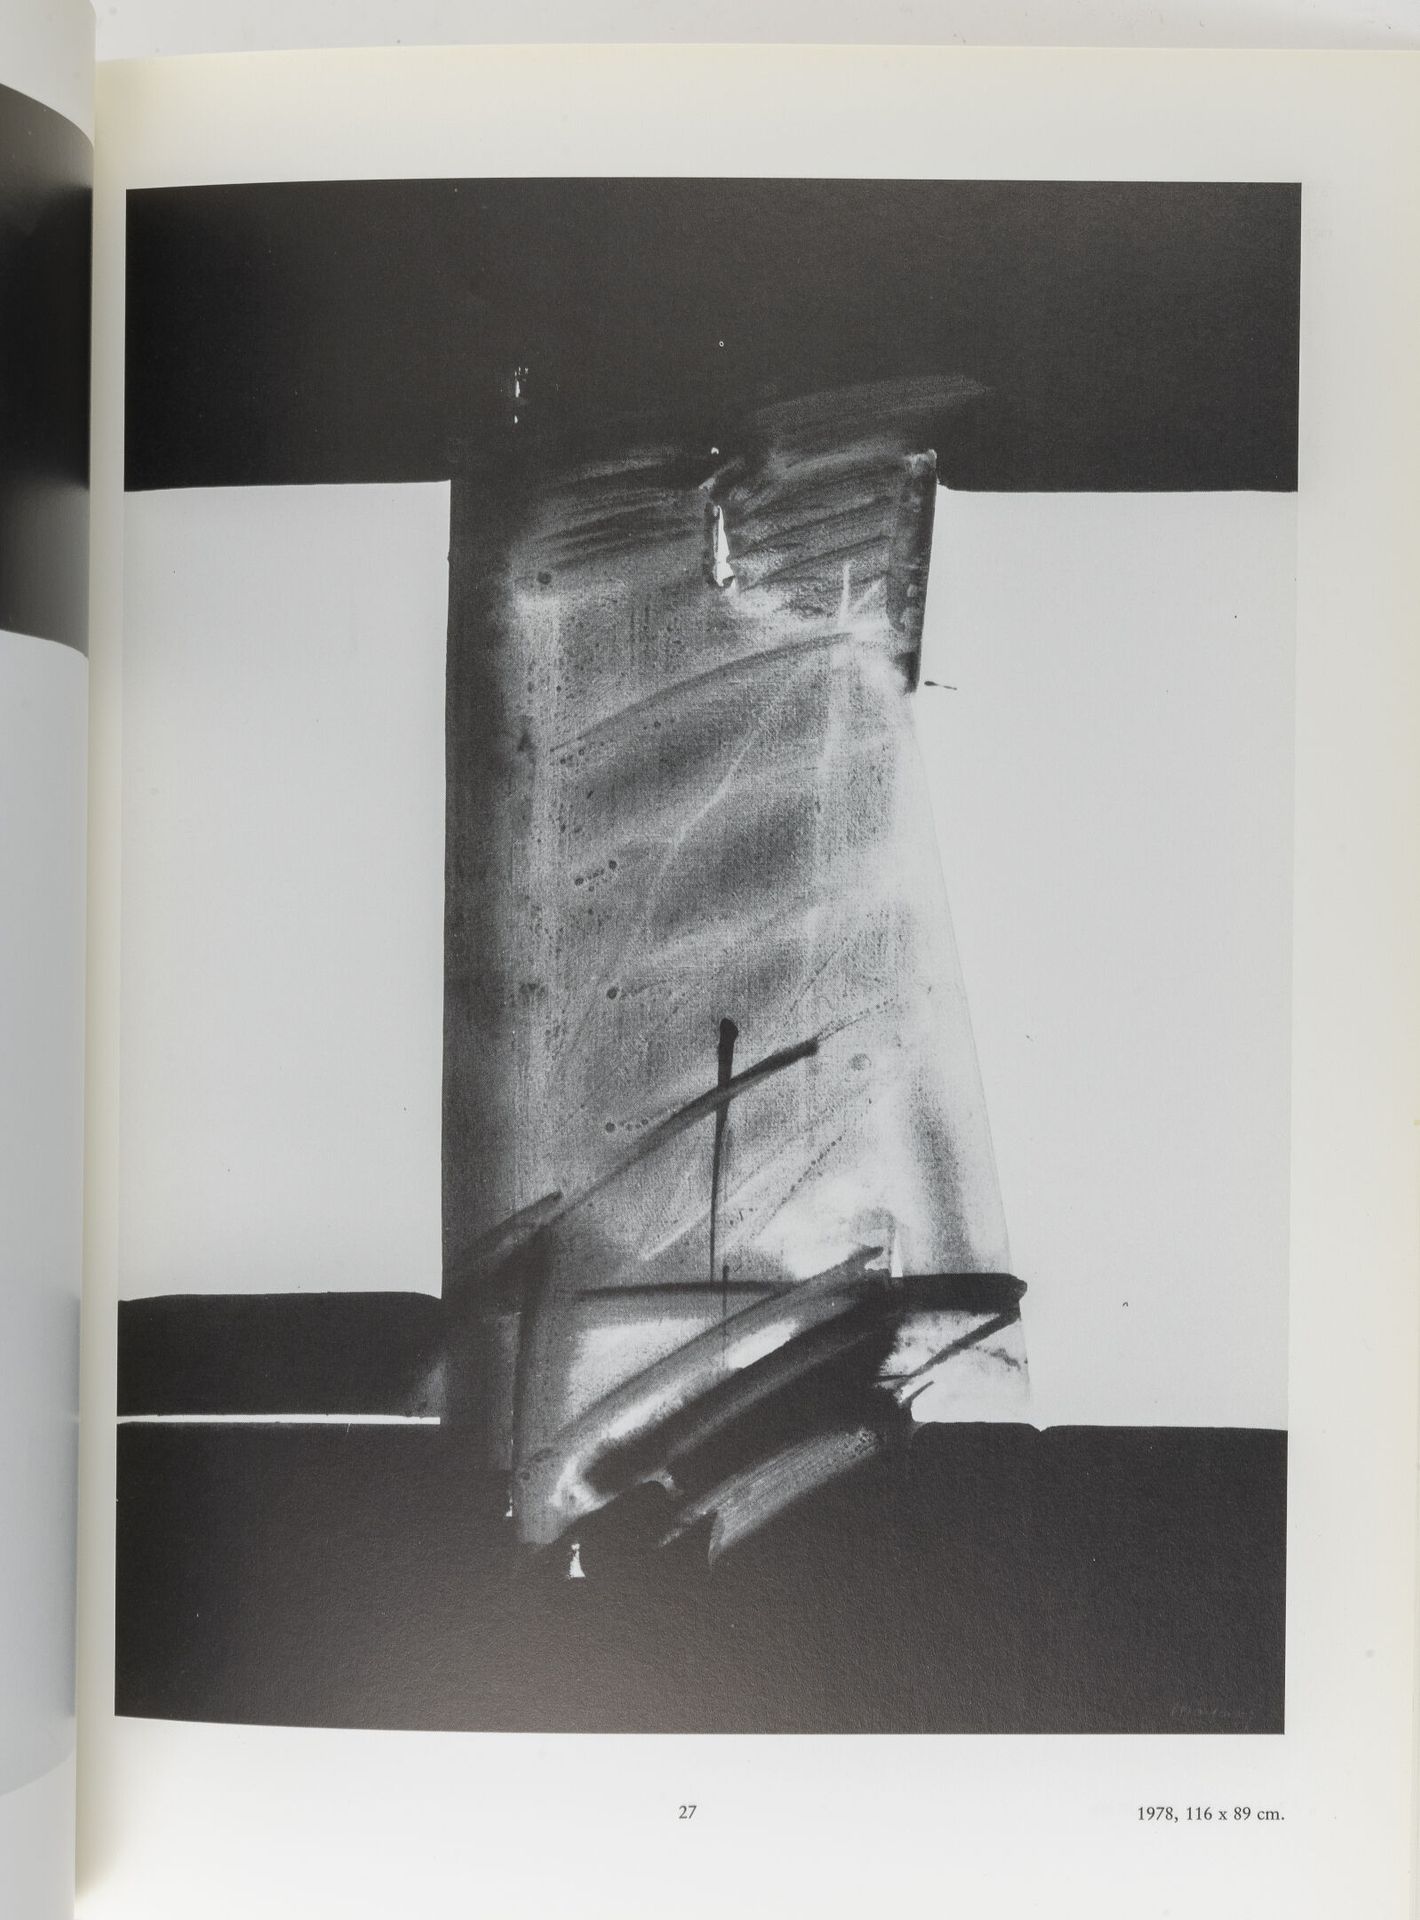 COLLECTIF 向玛法因致敬，1987年。

Ariel画廊、Biren画廊、Clivages画廊、Erval画廊。

一本小册子。

染色剂。